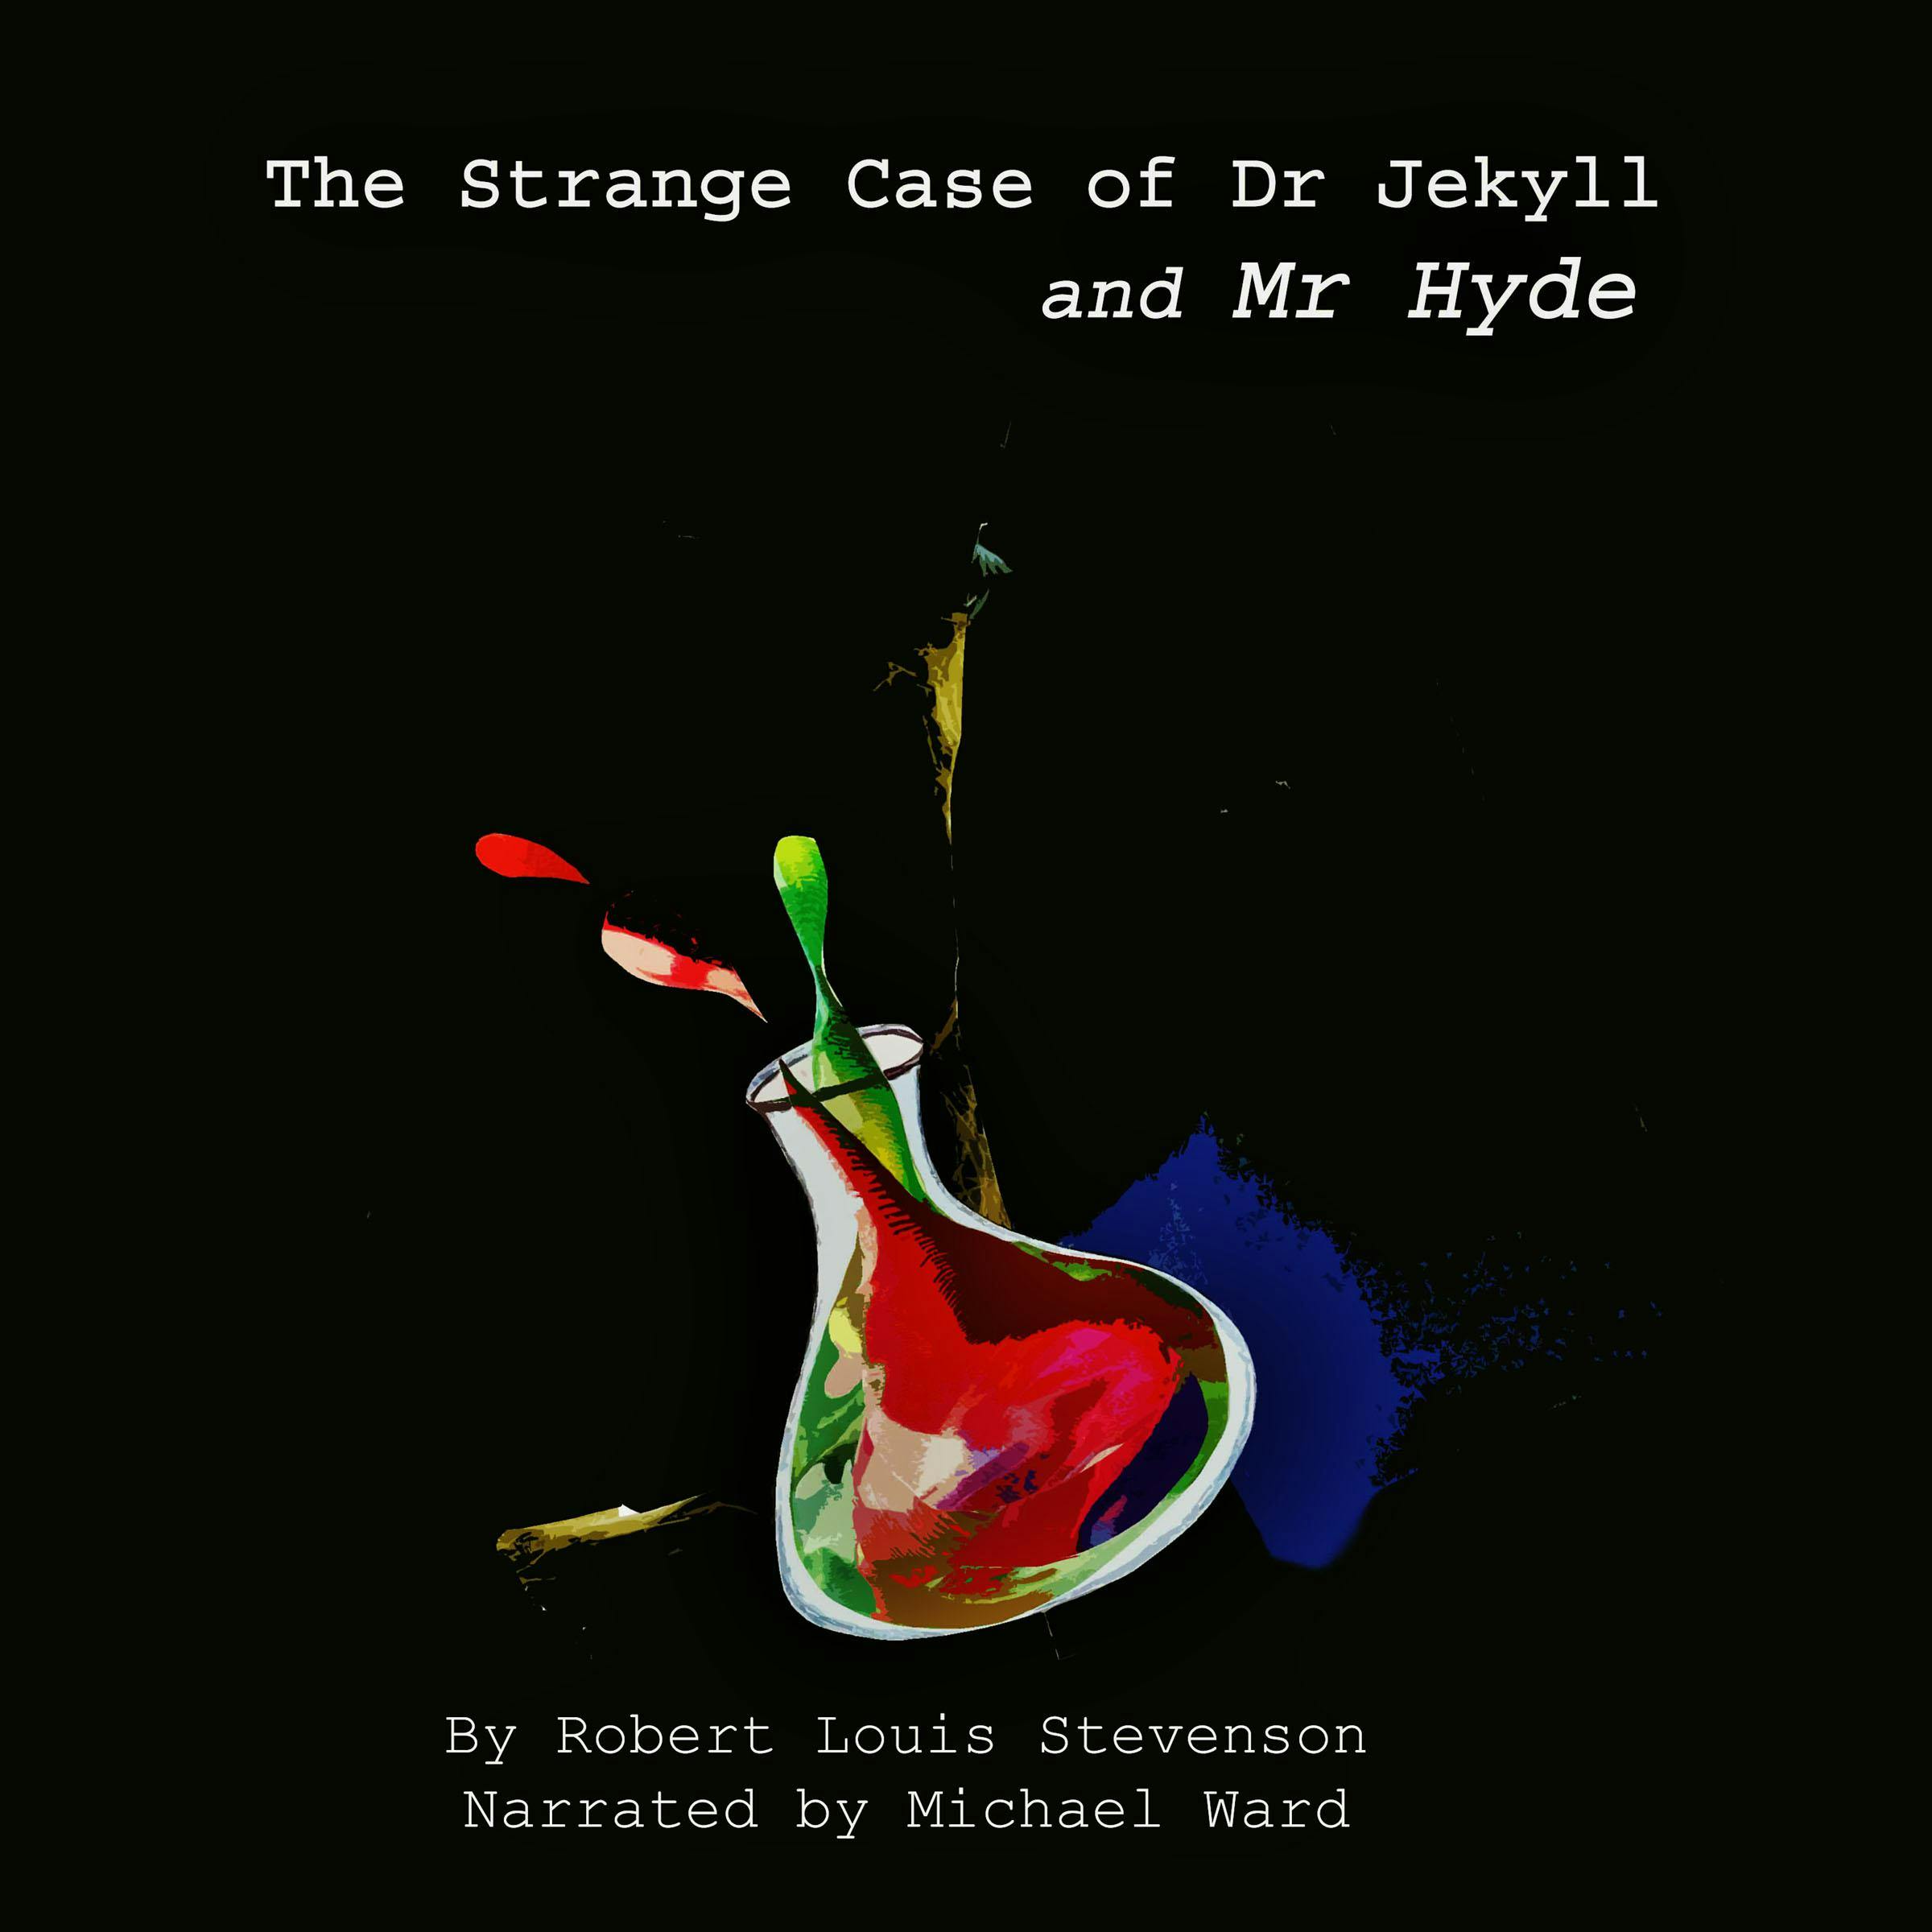 The Strange Case of Dr Jekyll & Mr Hyde - undefined